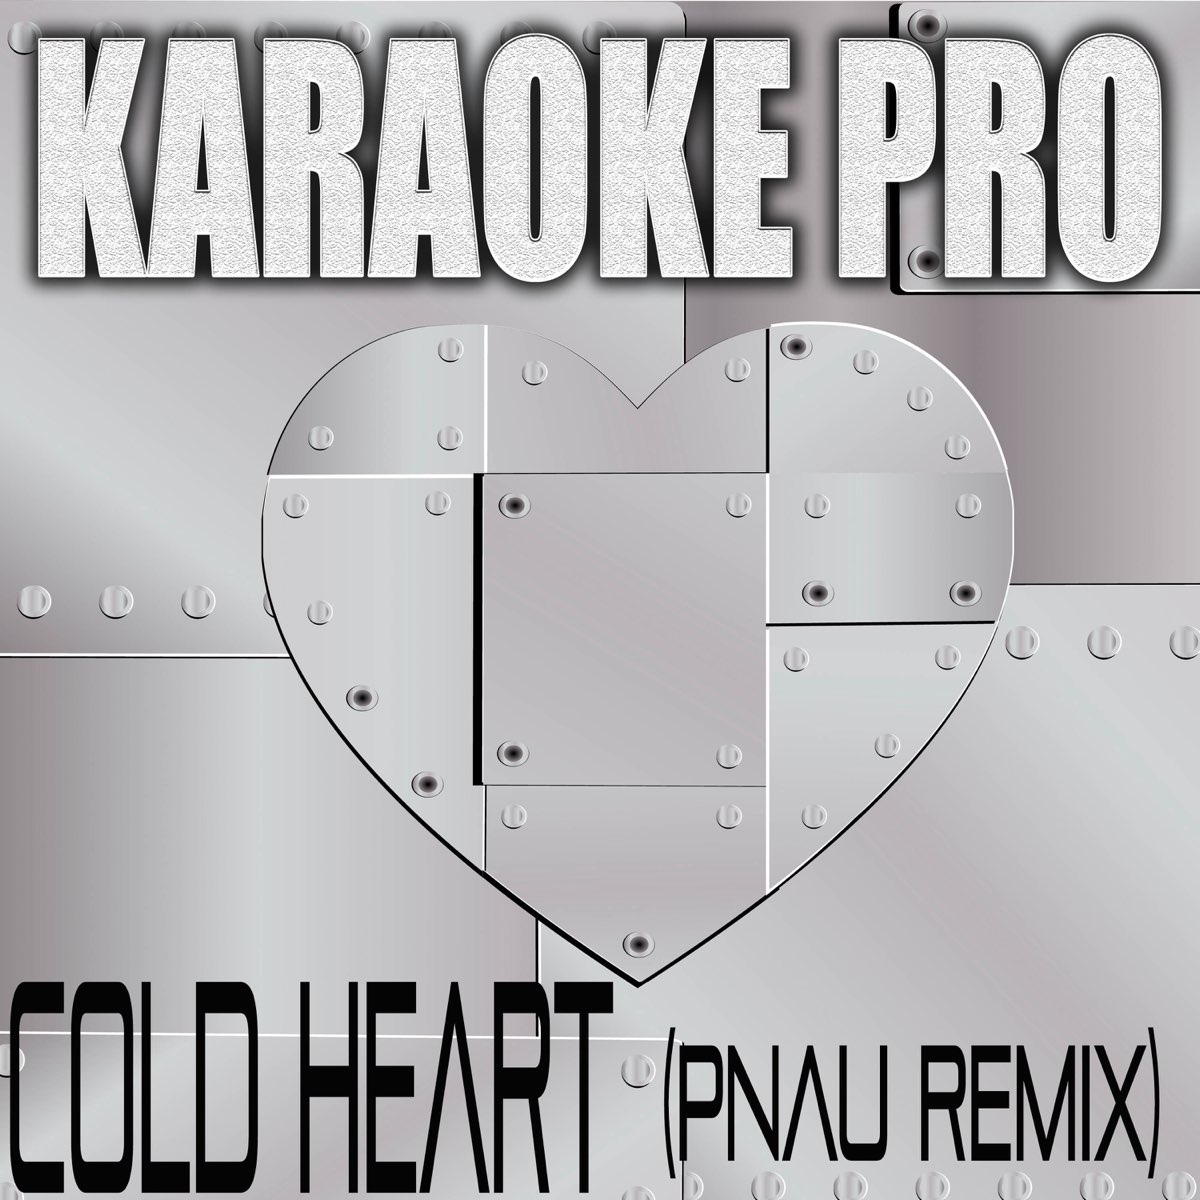 Cold Heart (Pnau Remix) (Originally Performed by Elton John and Dua Lipa) [ Instrumental Version] - Single par Karaoke Pro sur Apple Music